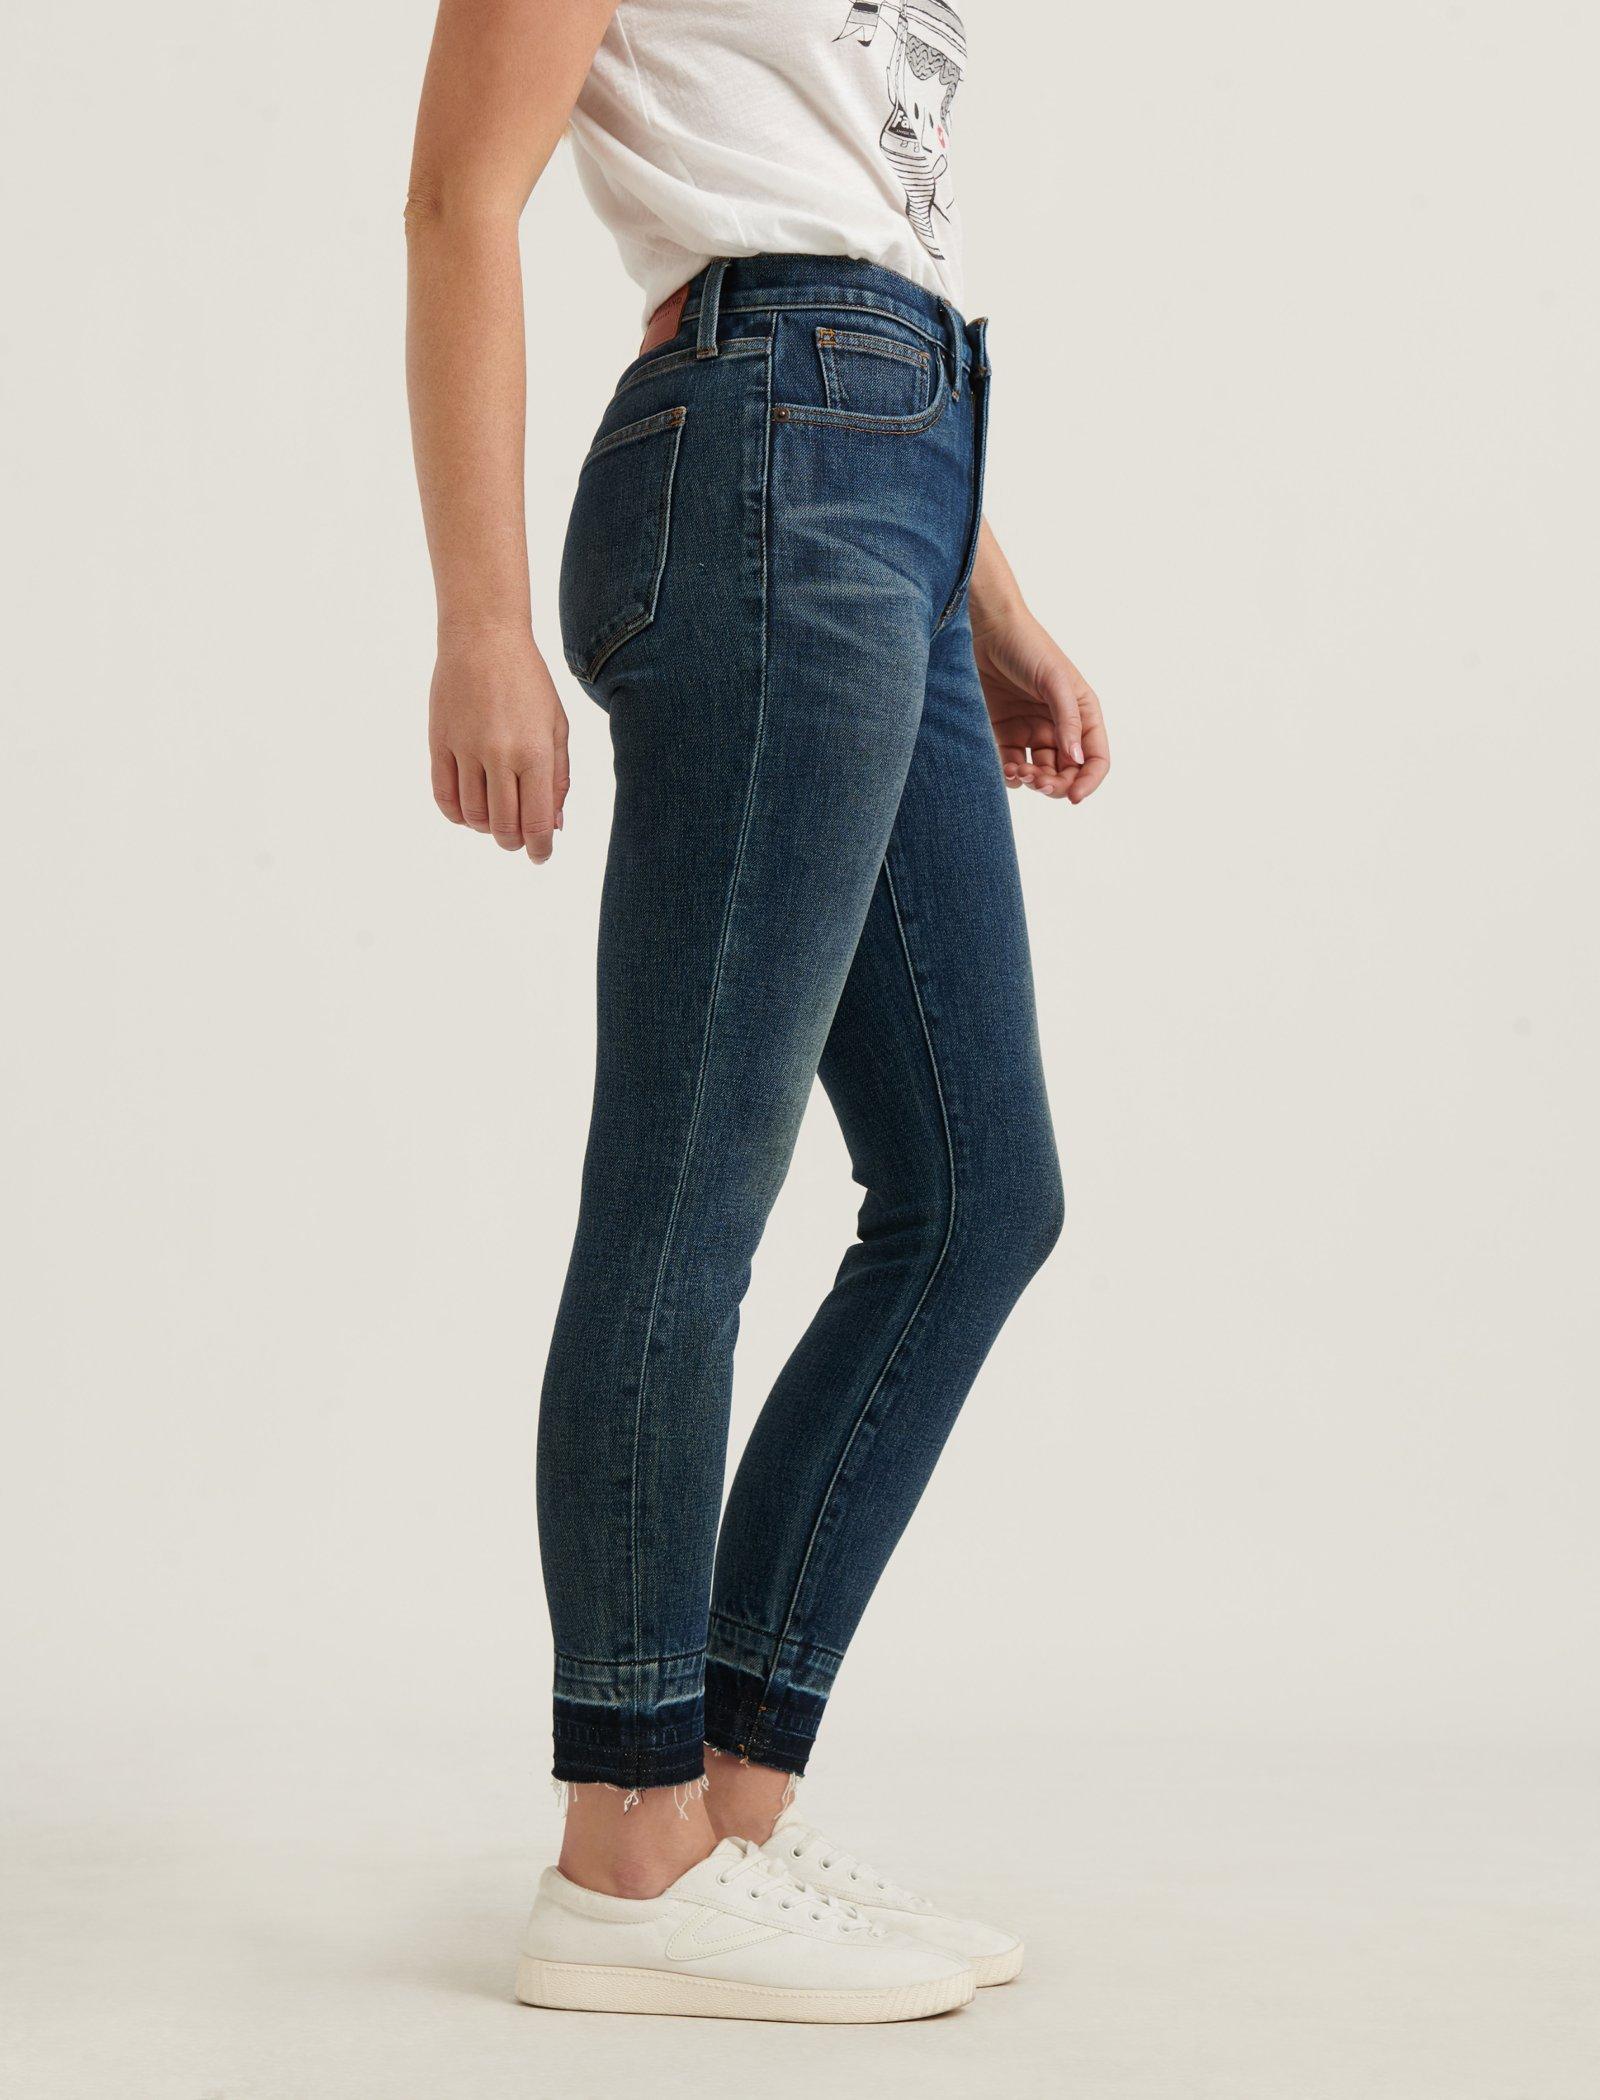 bridgette jeans lucky brand